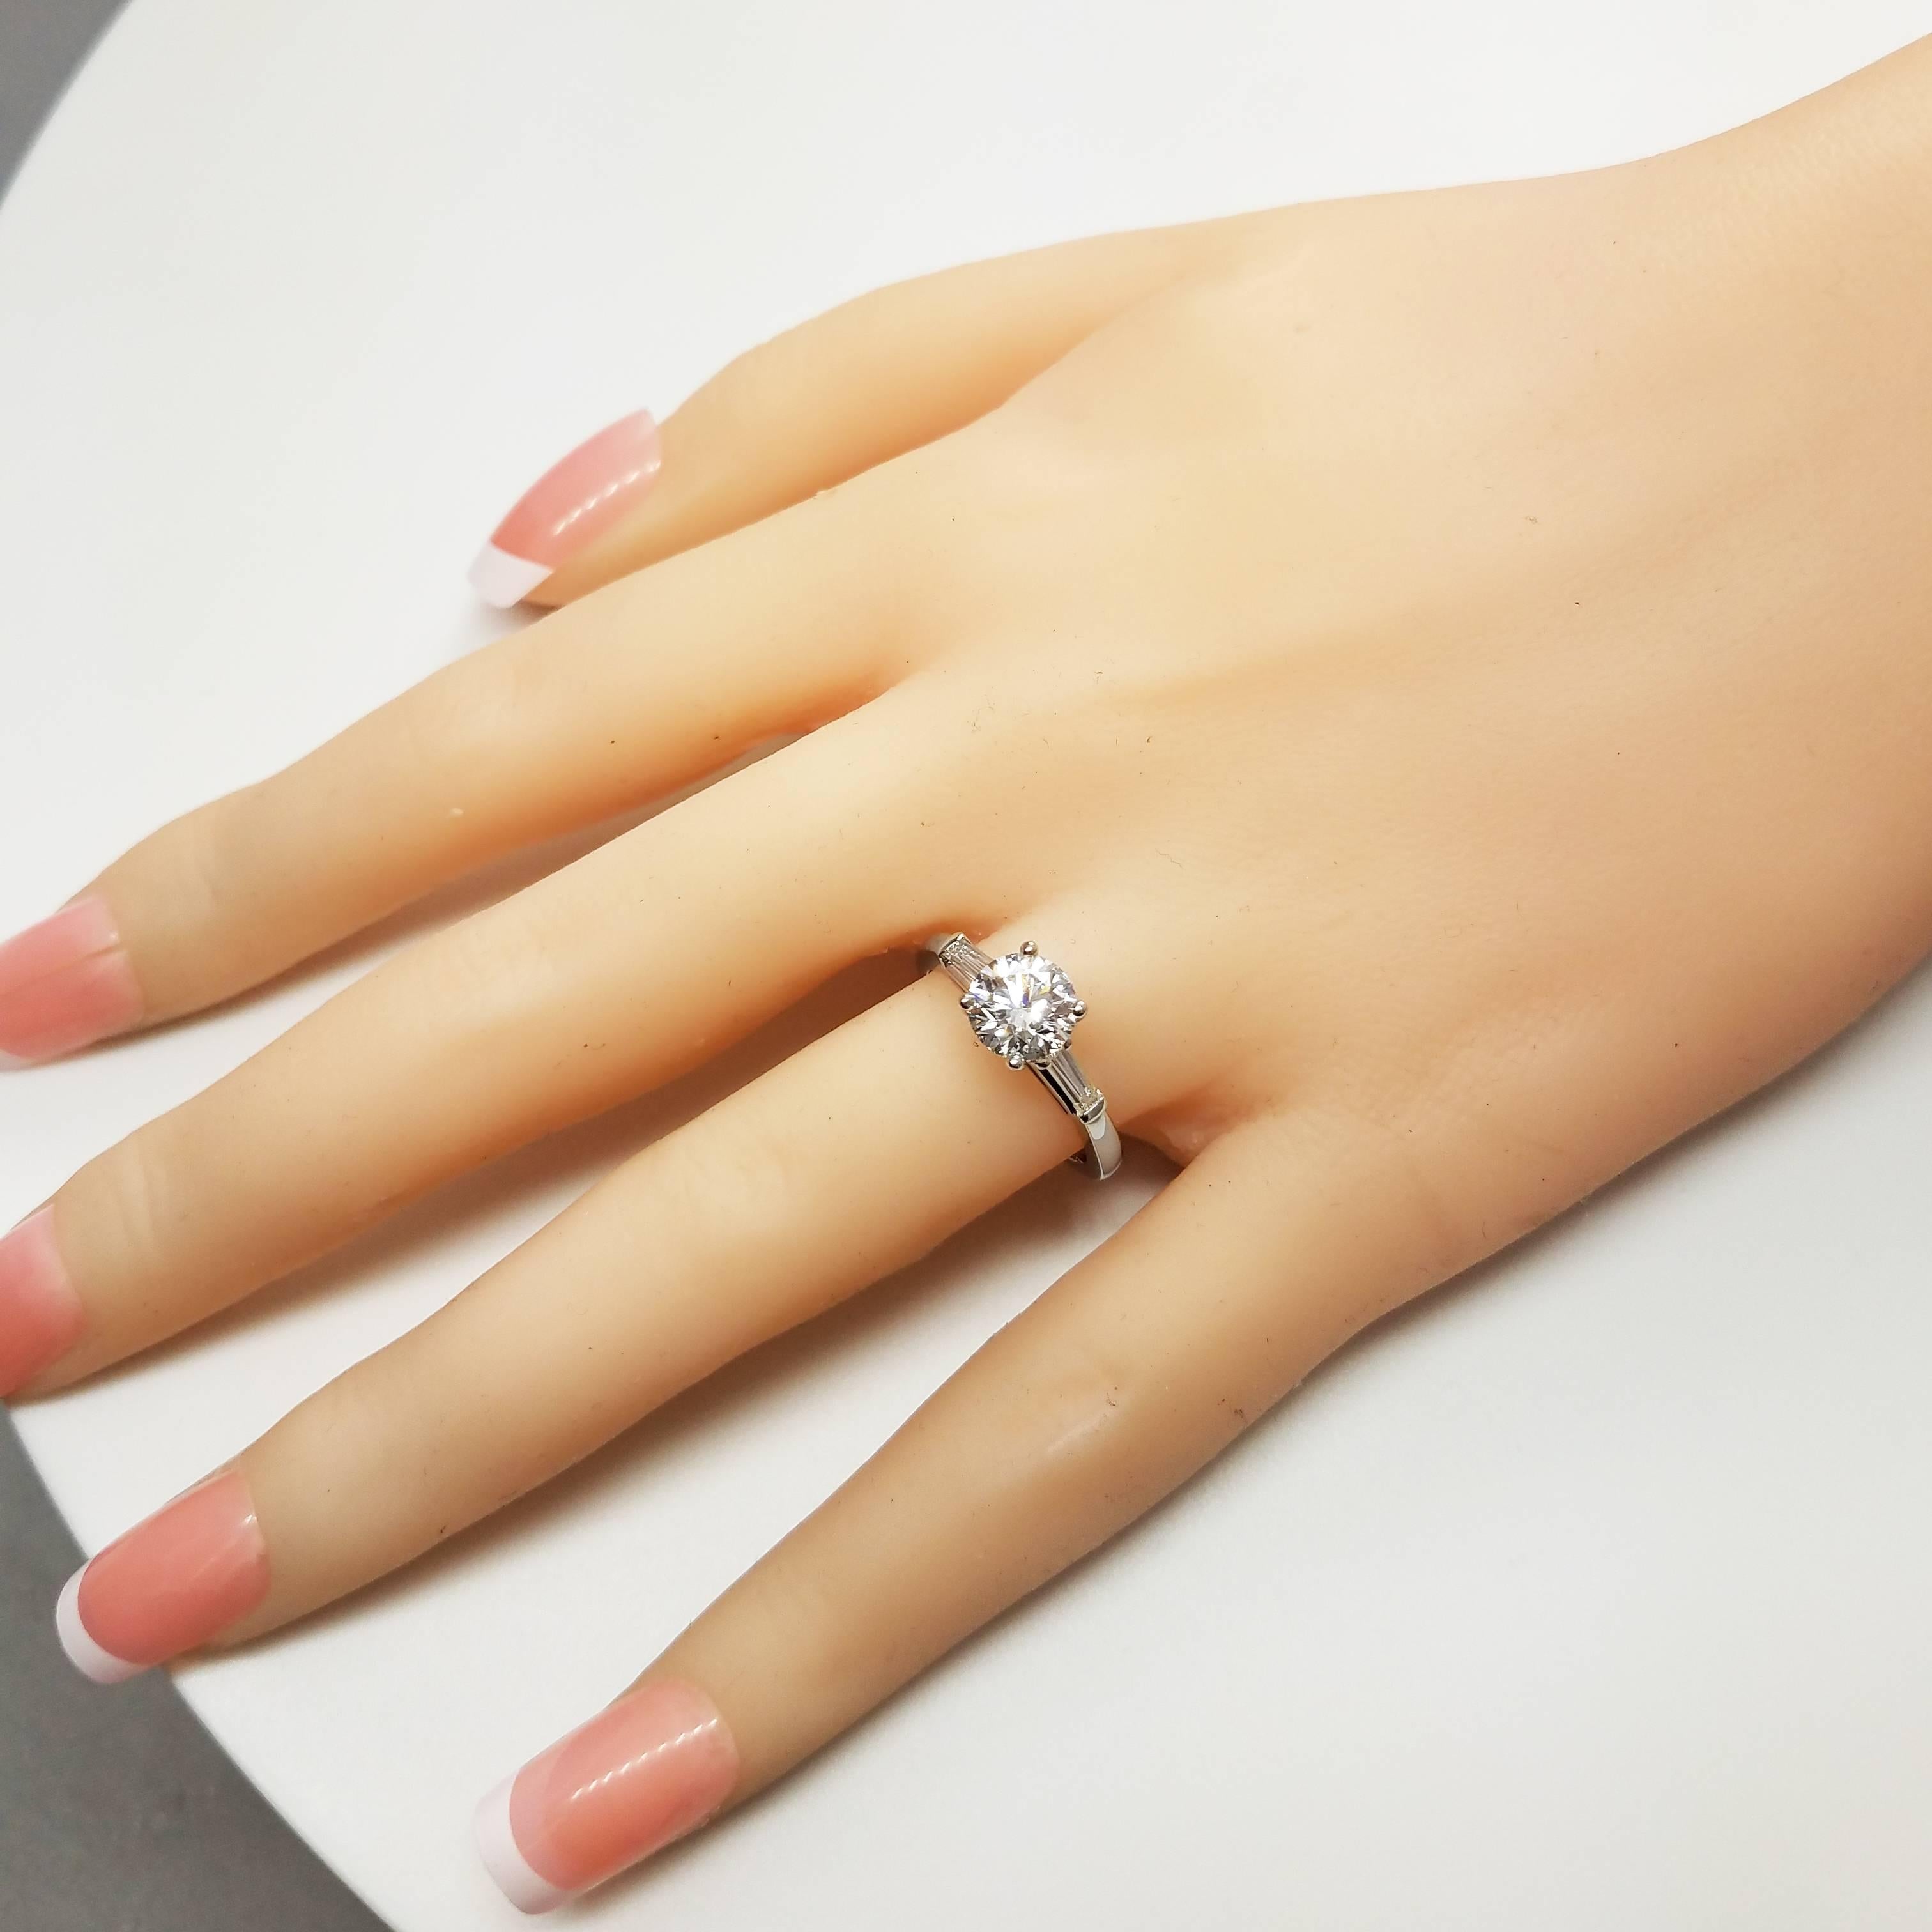 1.25 carat diamond ring